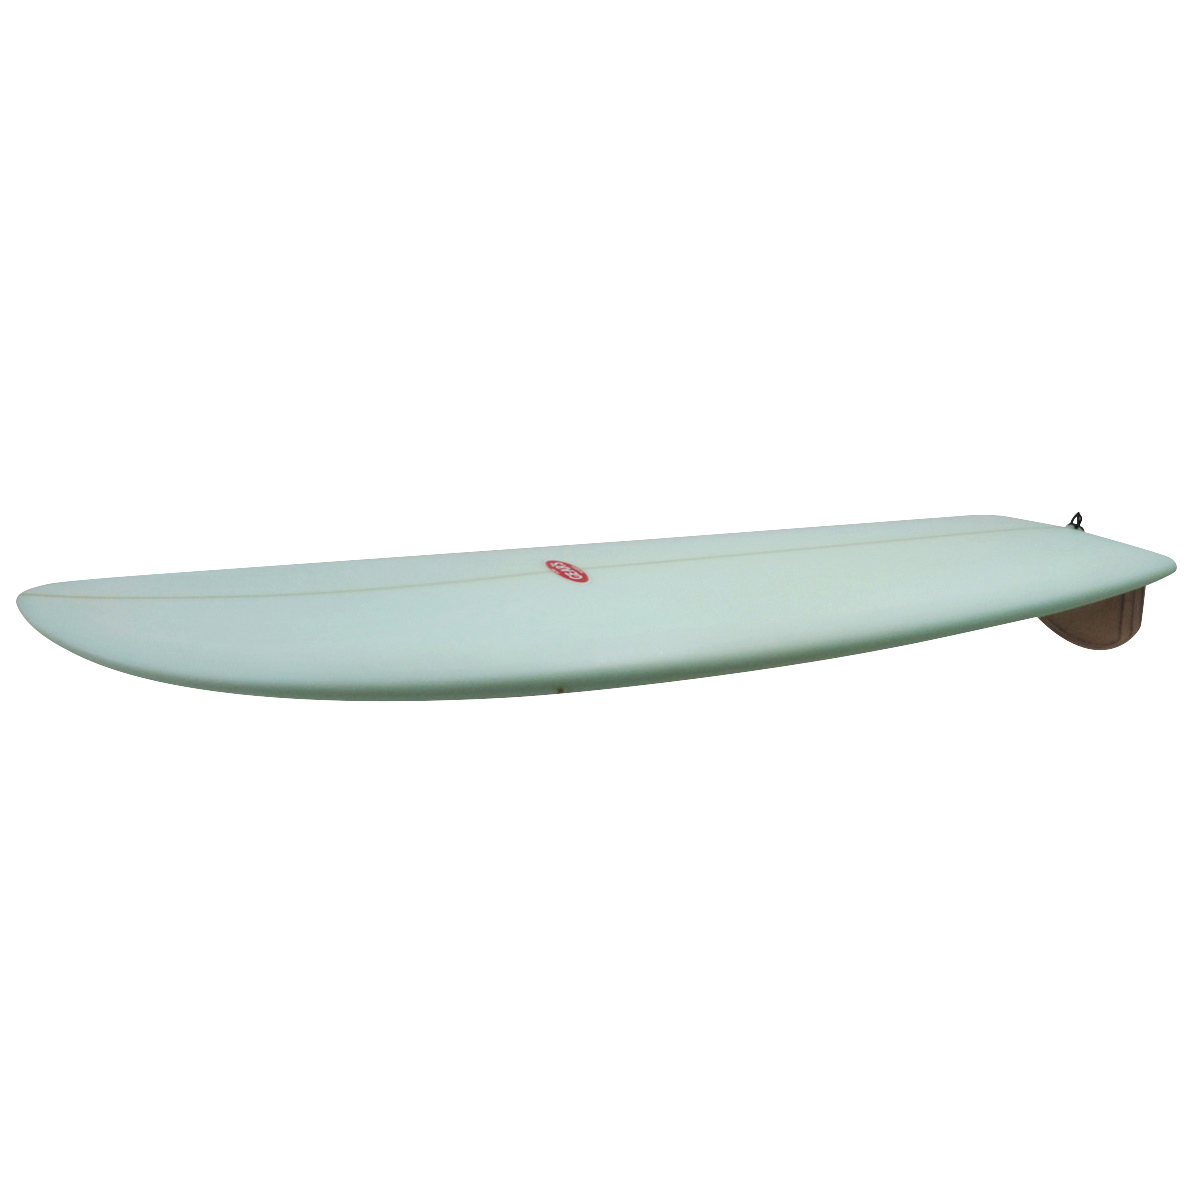 GEAR`S SURFBOARDS / OMOCHI 5`3 Shaped by Yuichi Endo